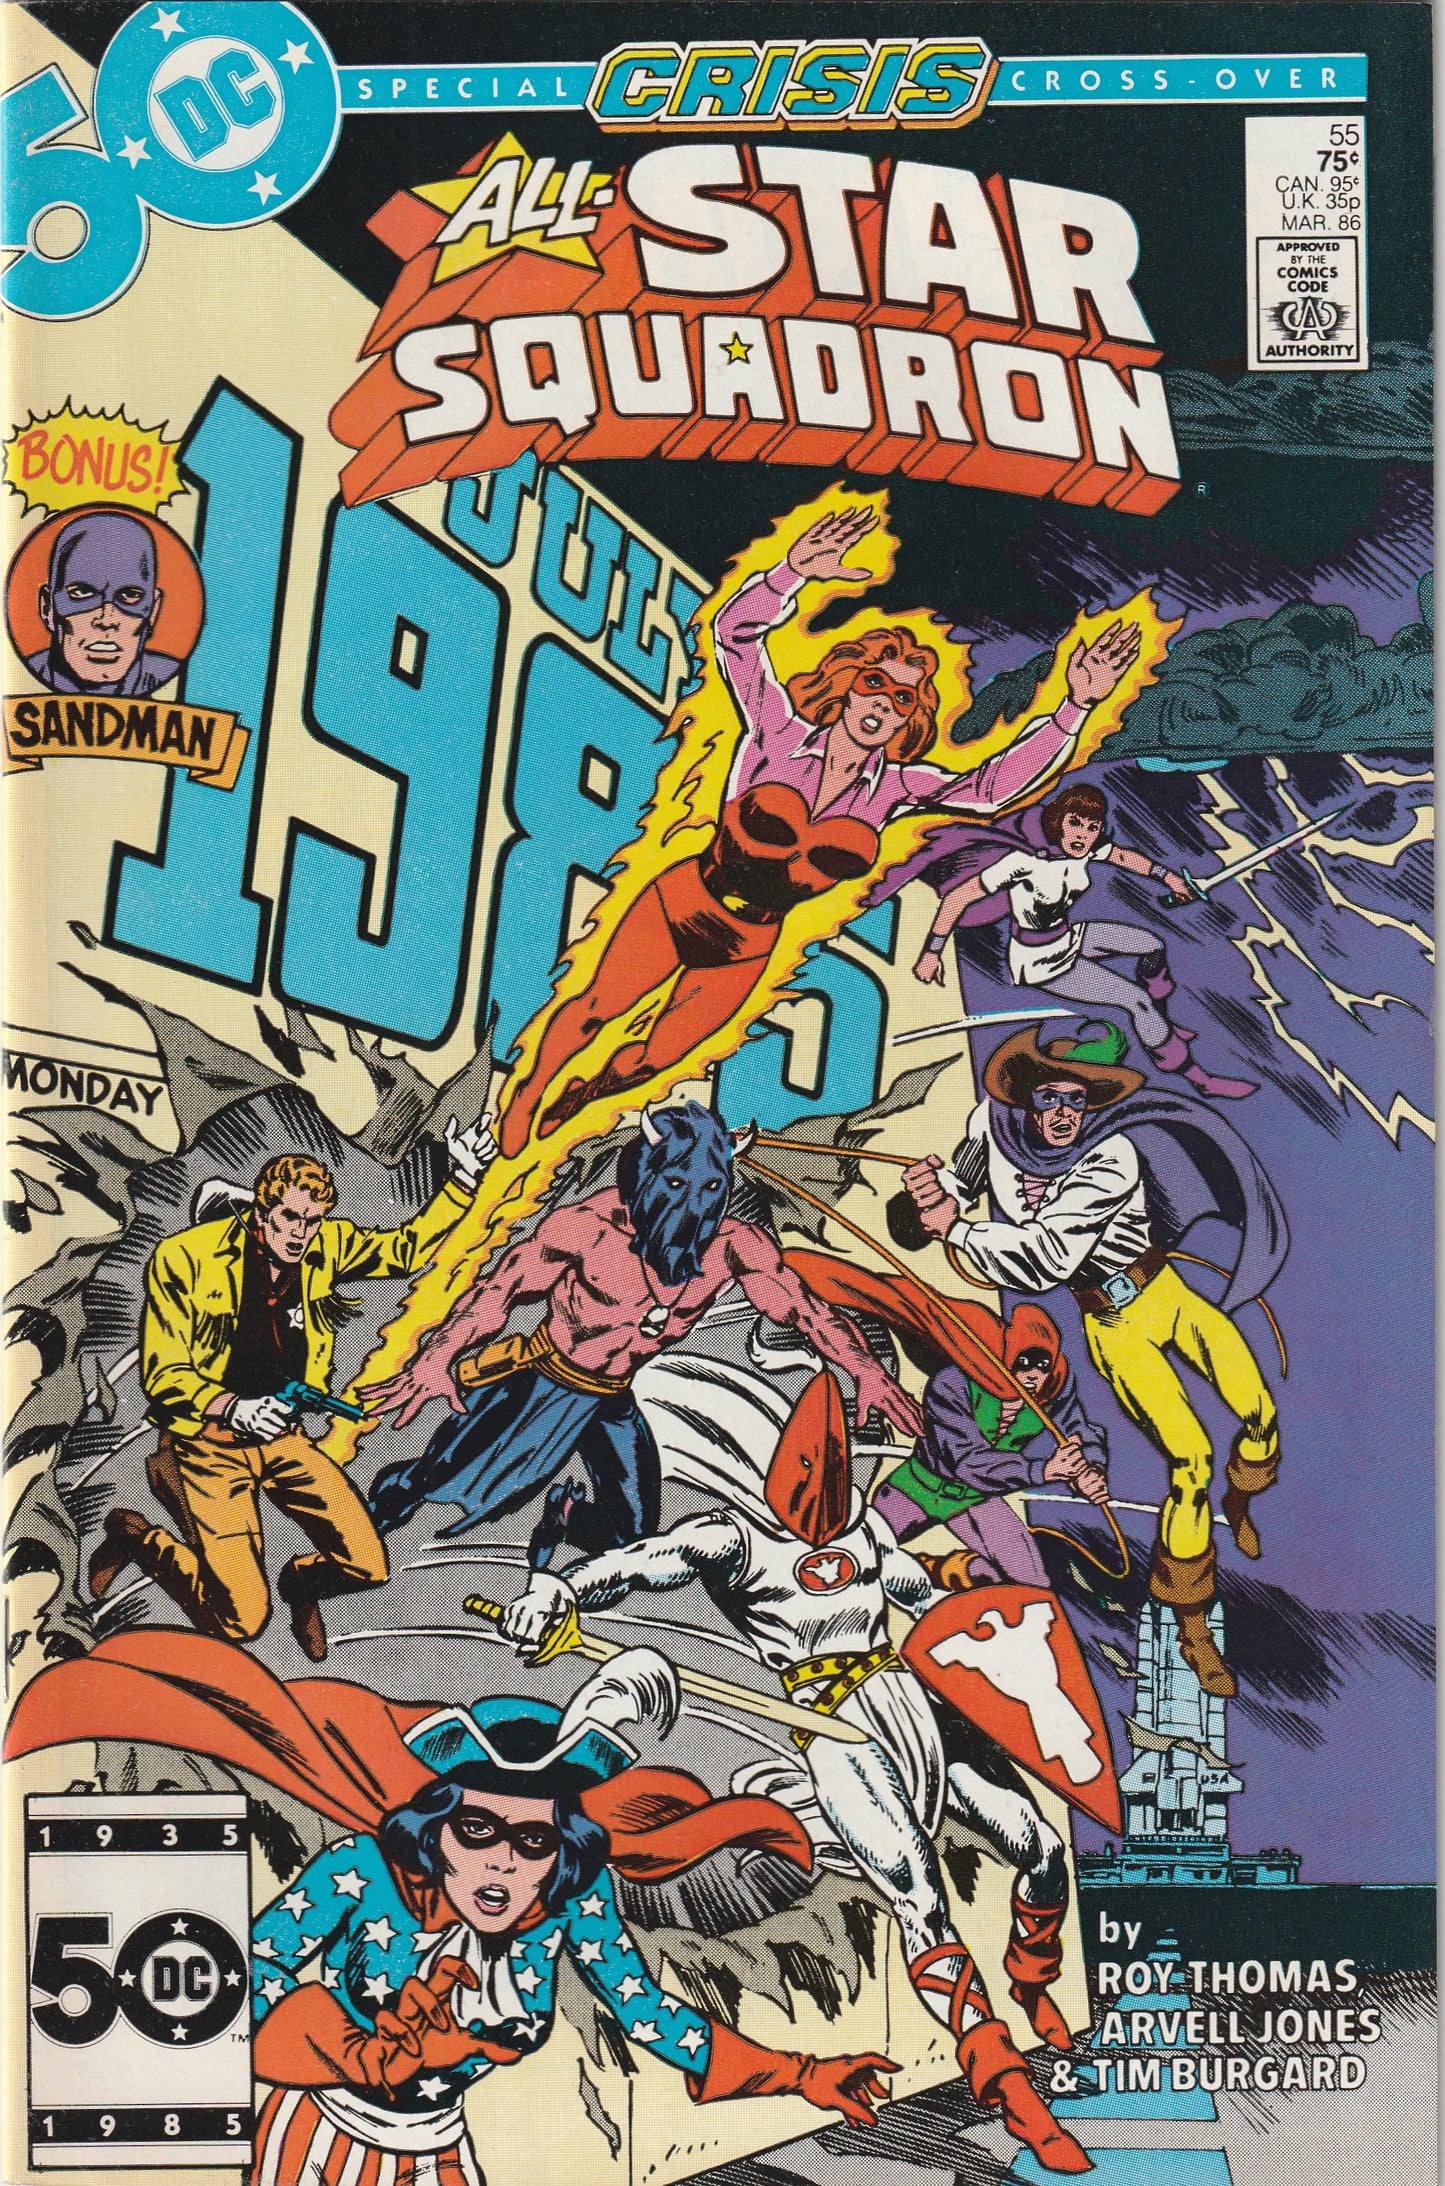 All-Star Squadron #55 (1986) - Crisis crossover